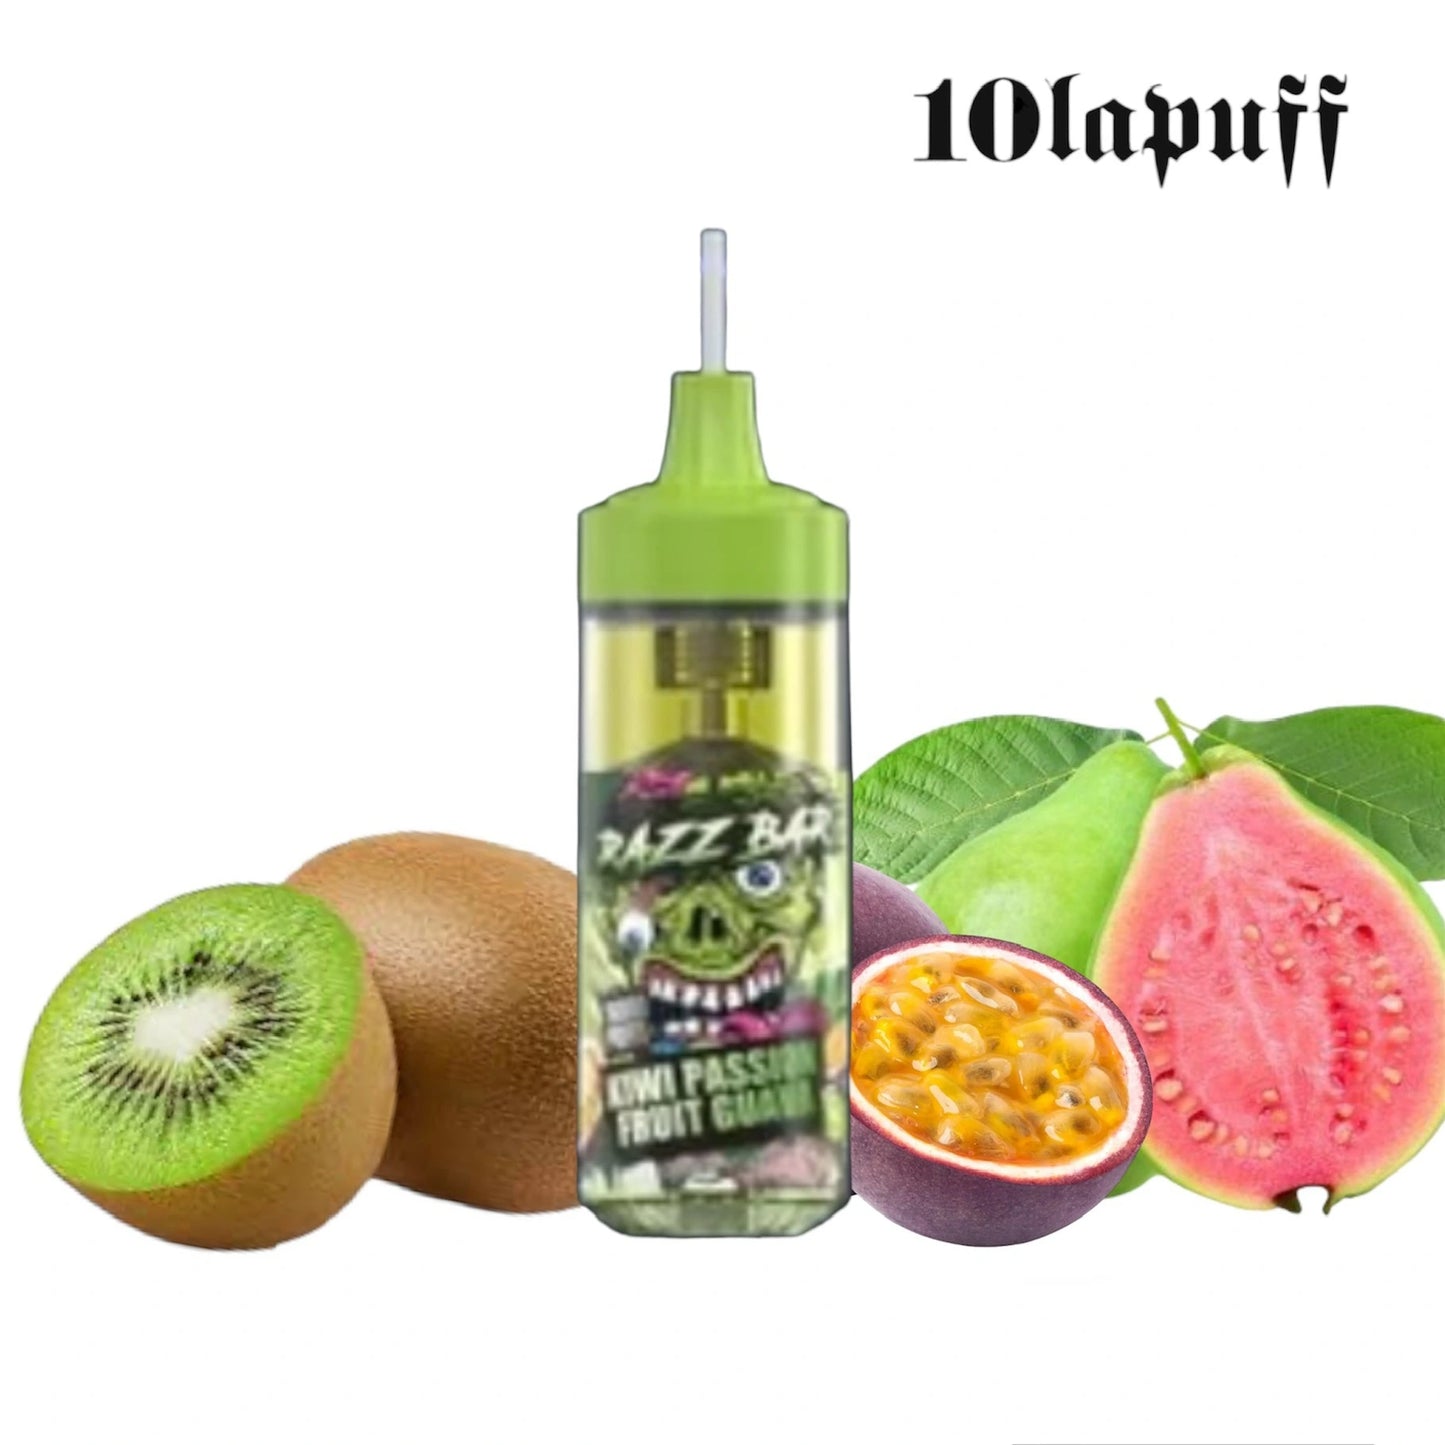 PUFF 16000 RAZZBAR - Passion Fruit Kiwi Guava